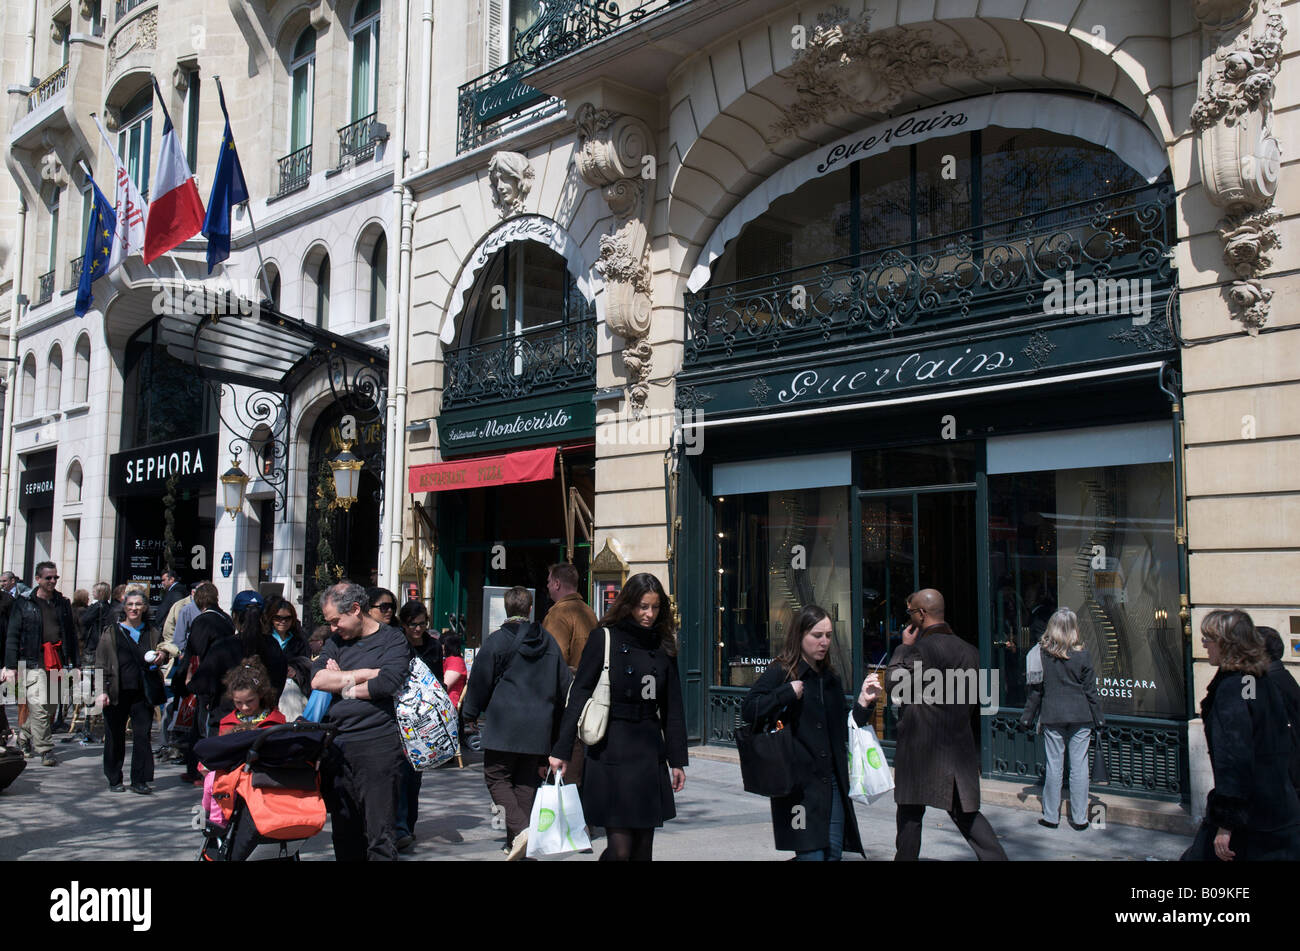 Shopping On Champs Élysées Paris Stock Photo - Download Image Now -  Sephora, Avenue des Champs-Elysees, Shopping - iStock